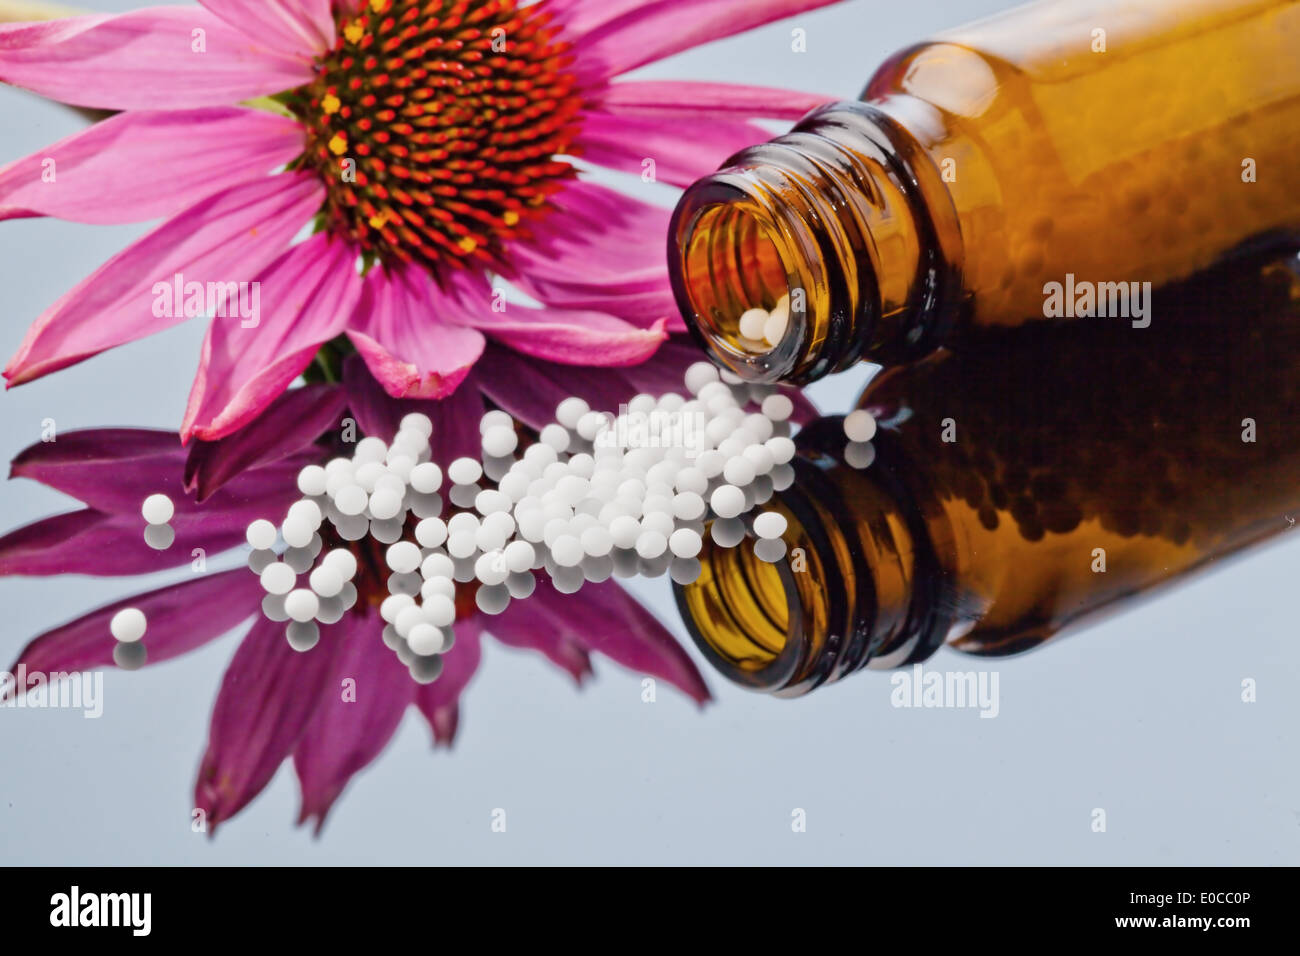 Globuli to the treatment of illnesses in the gentle, alternative medicine. Tablets and drugs., Globuli zur Behandlung von Krankh Stock Photo